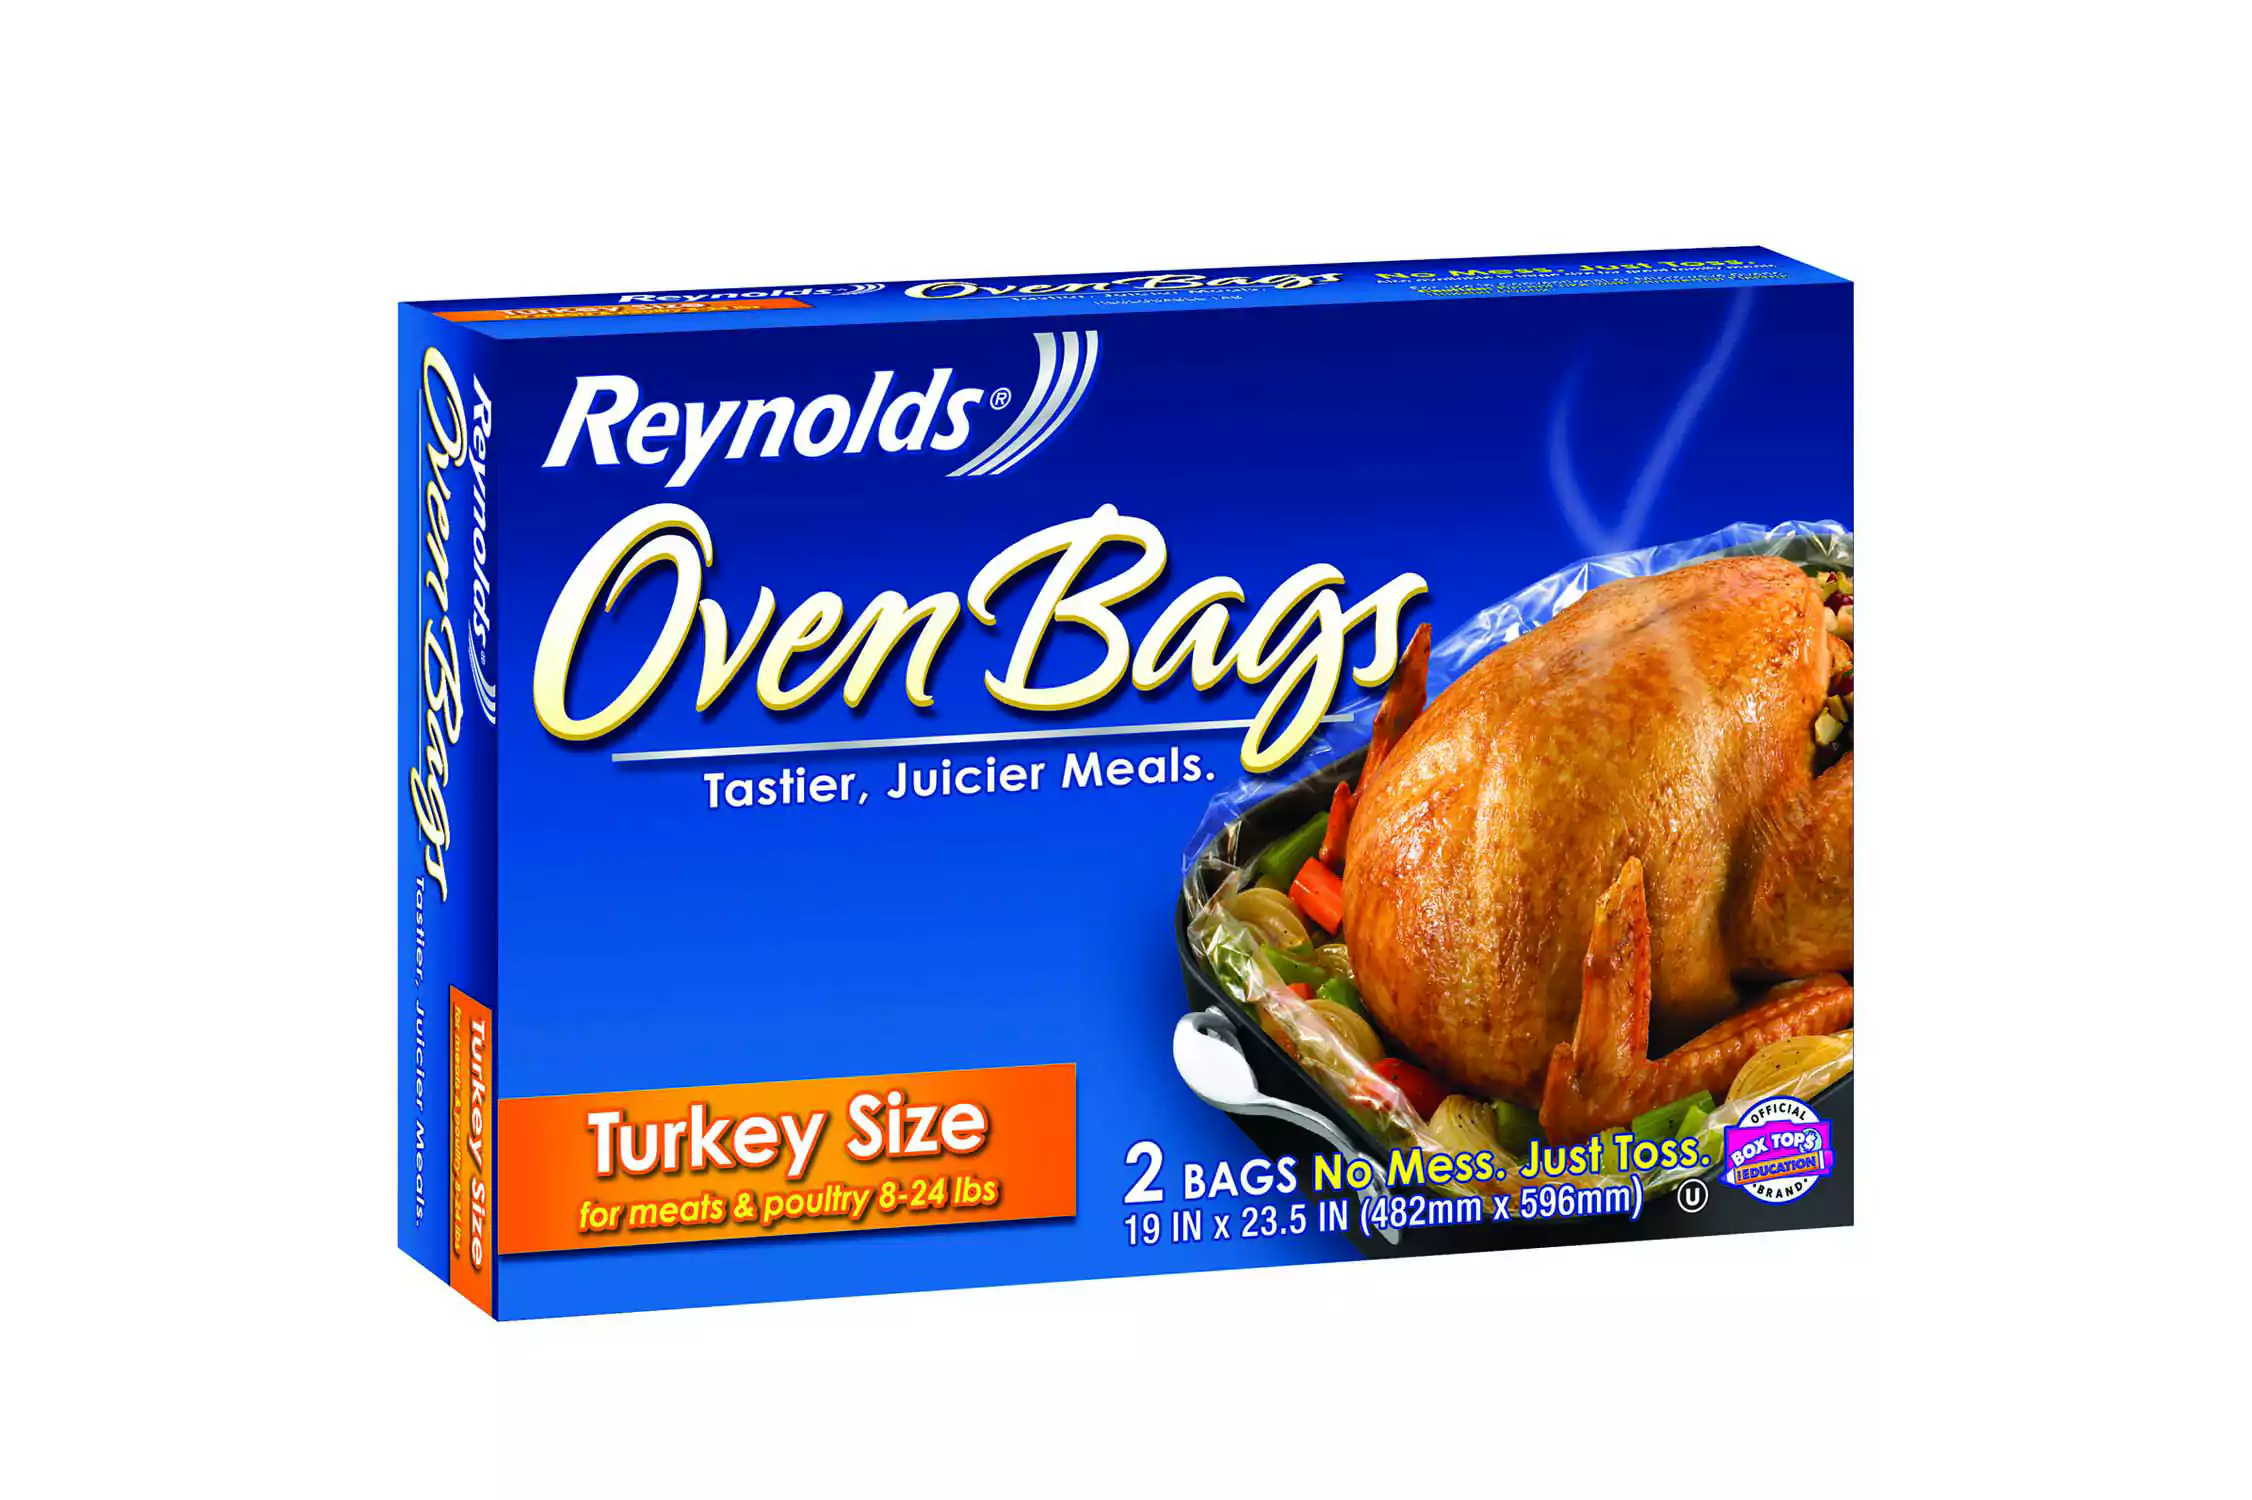 Turkey Bags